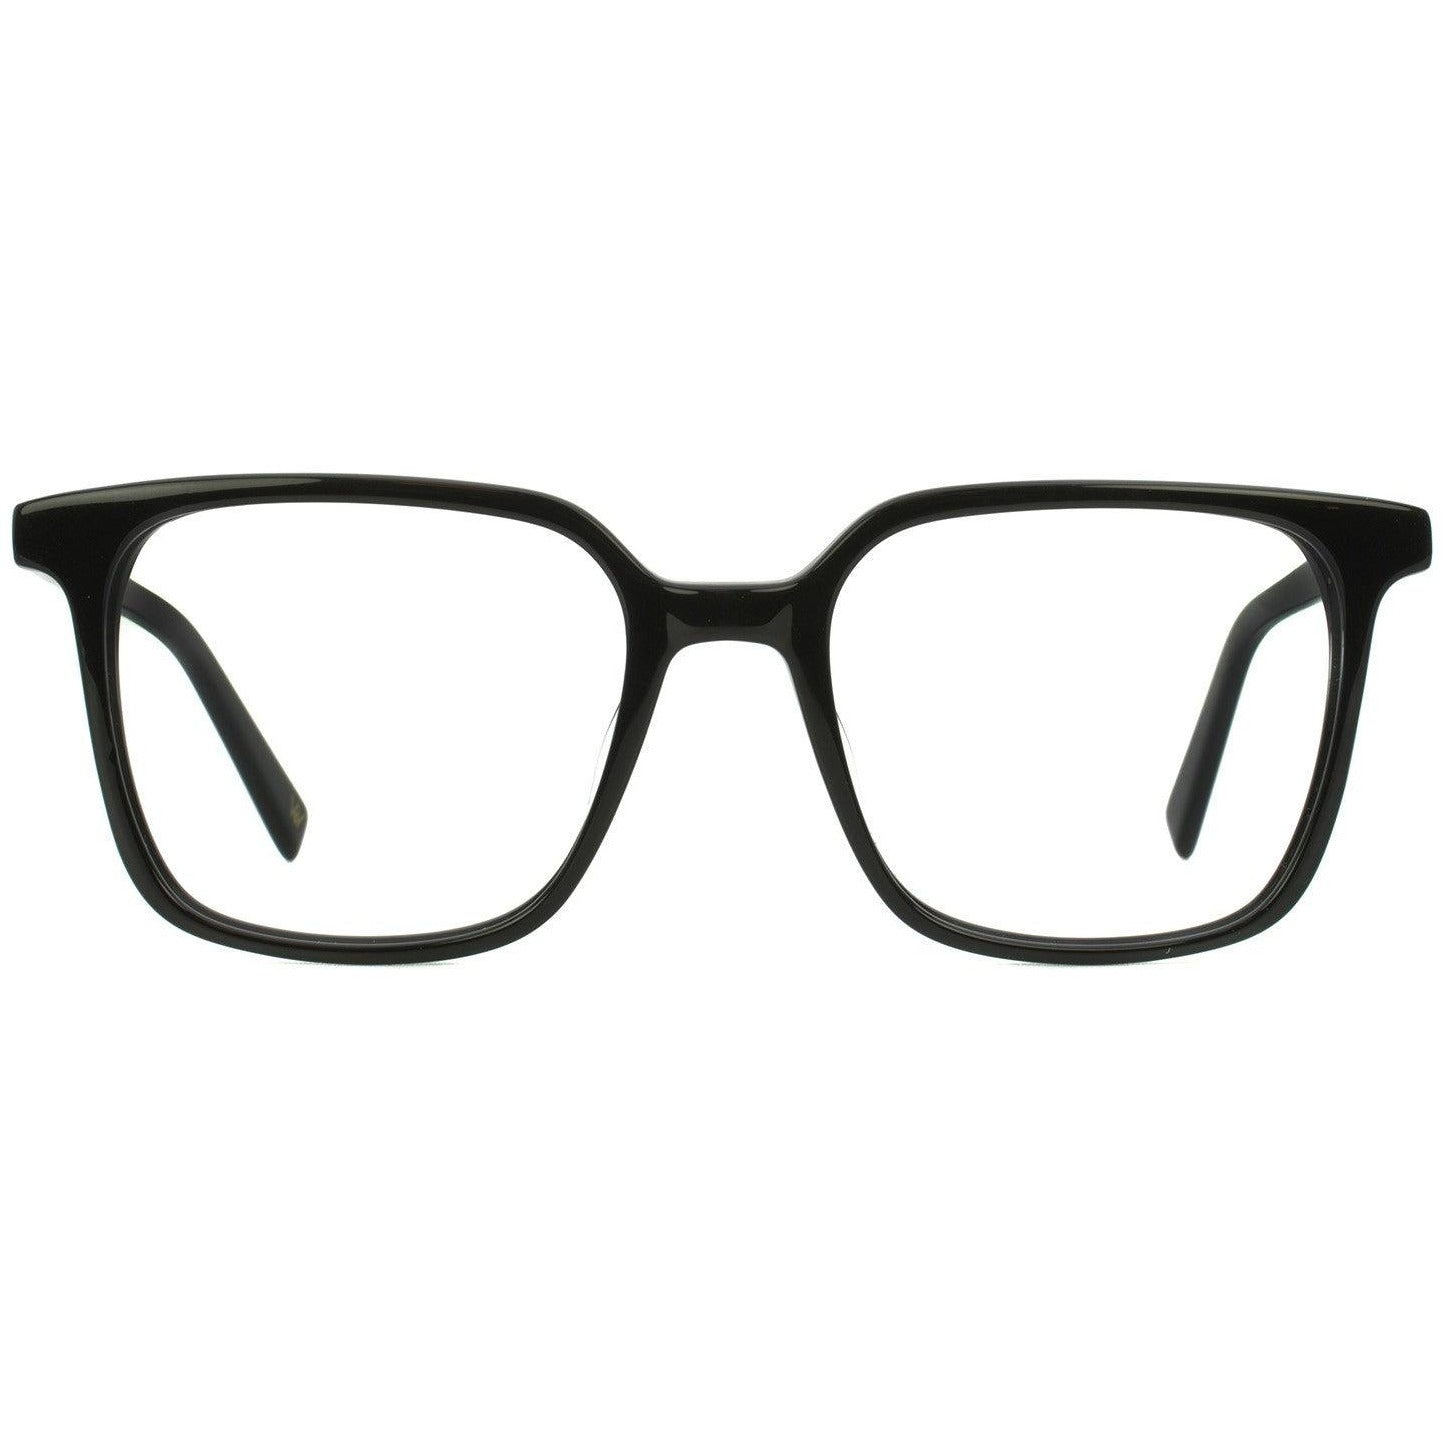 Jive Eyeglasses | Vint and York